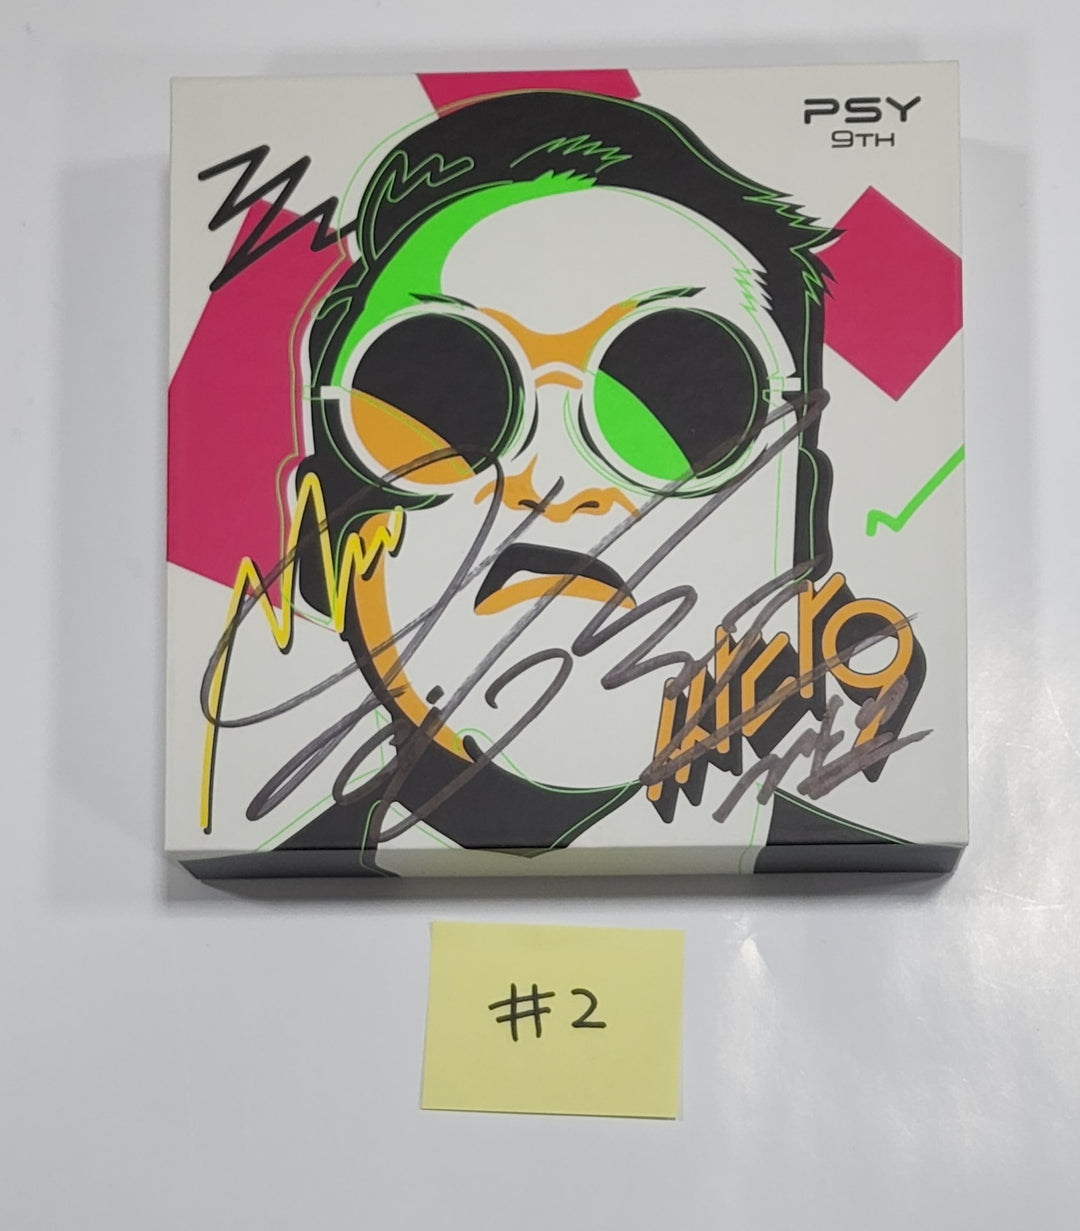 PSY "SSADA9" 9th Album - Hand Autographed(Signed) Promo Album